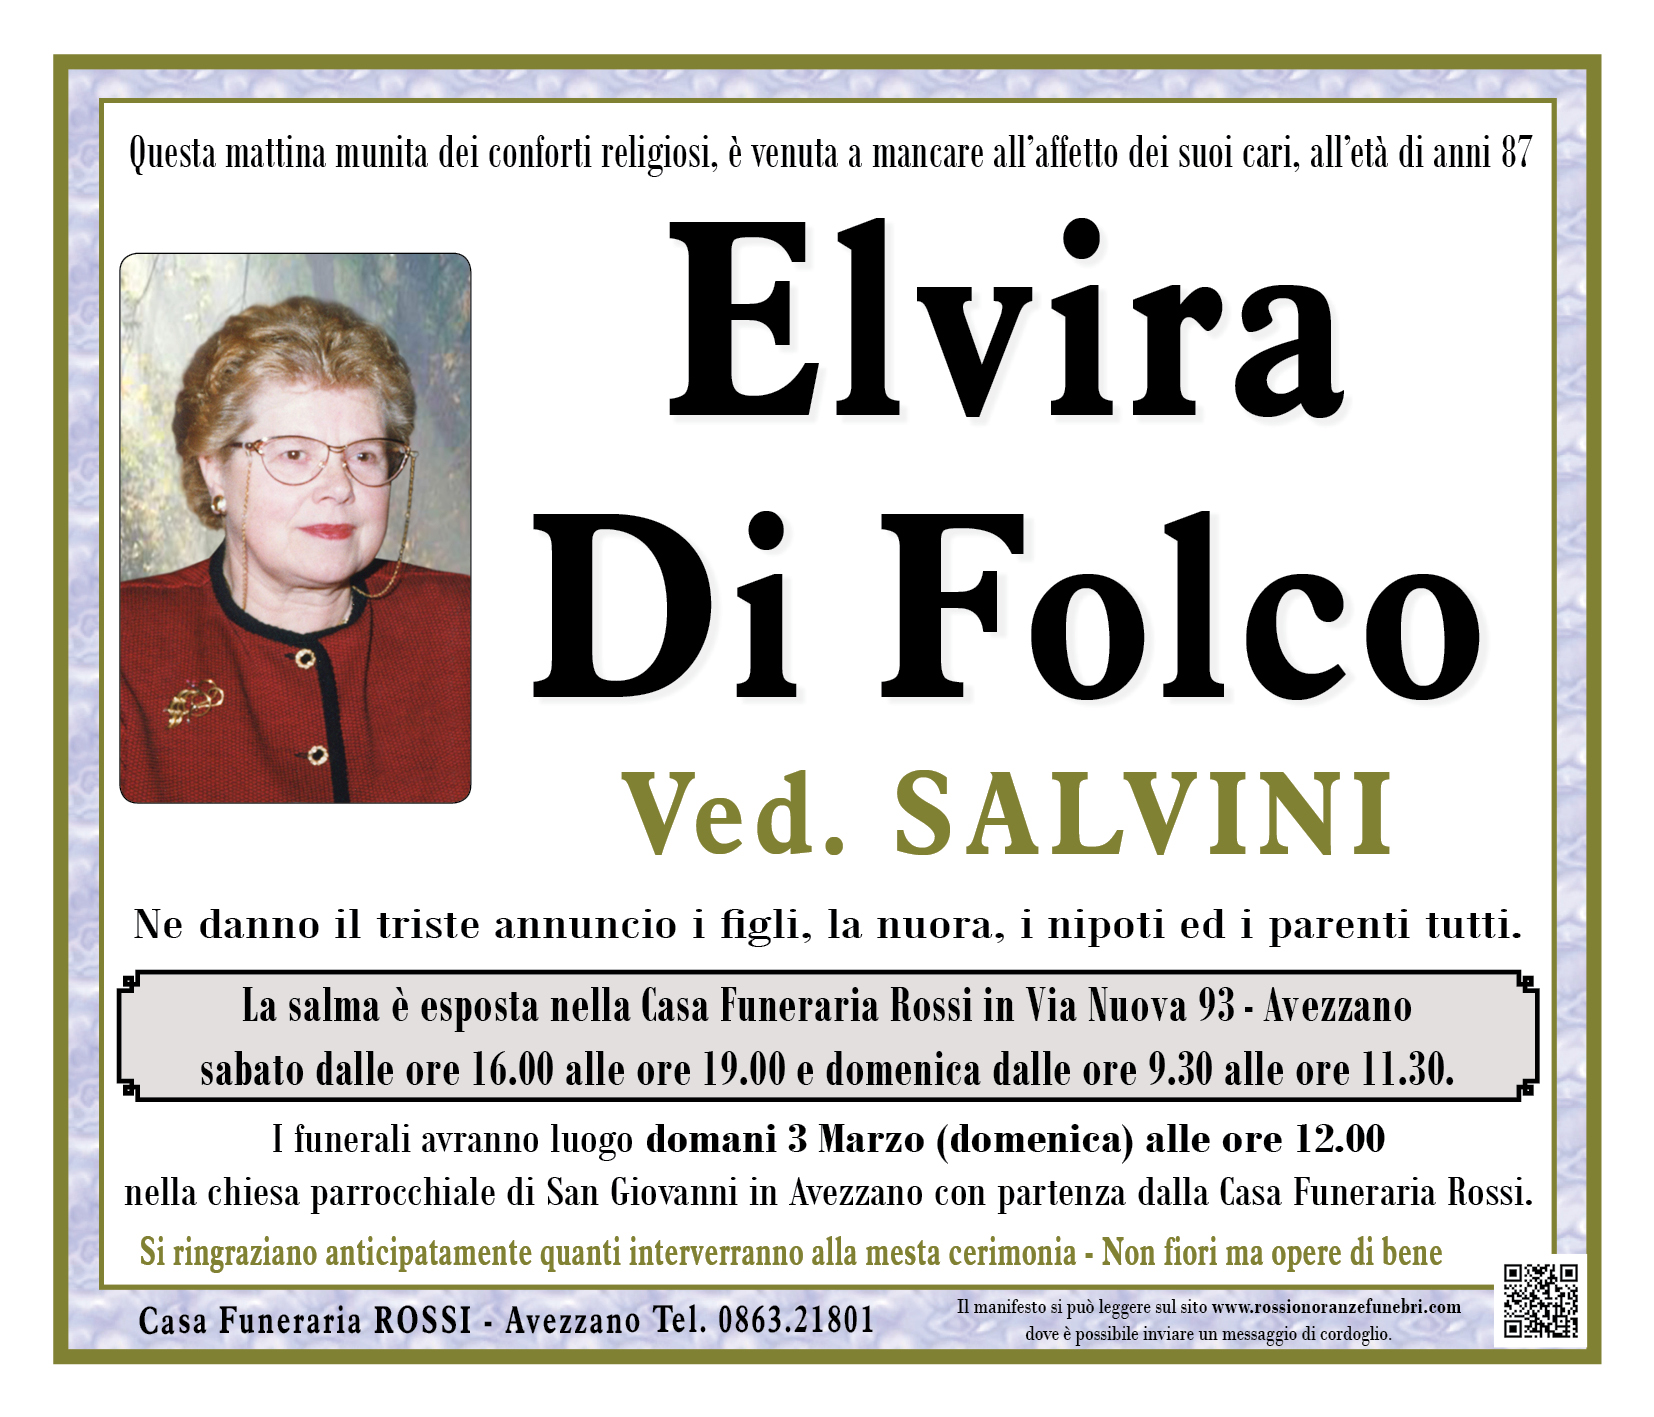 Elvira Di Folco